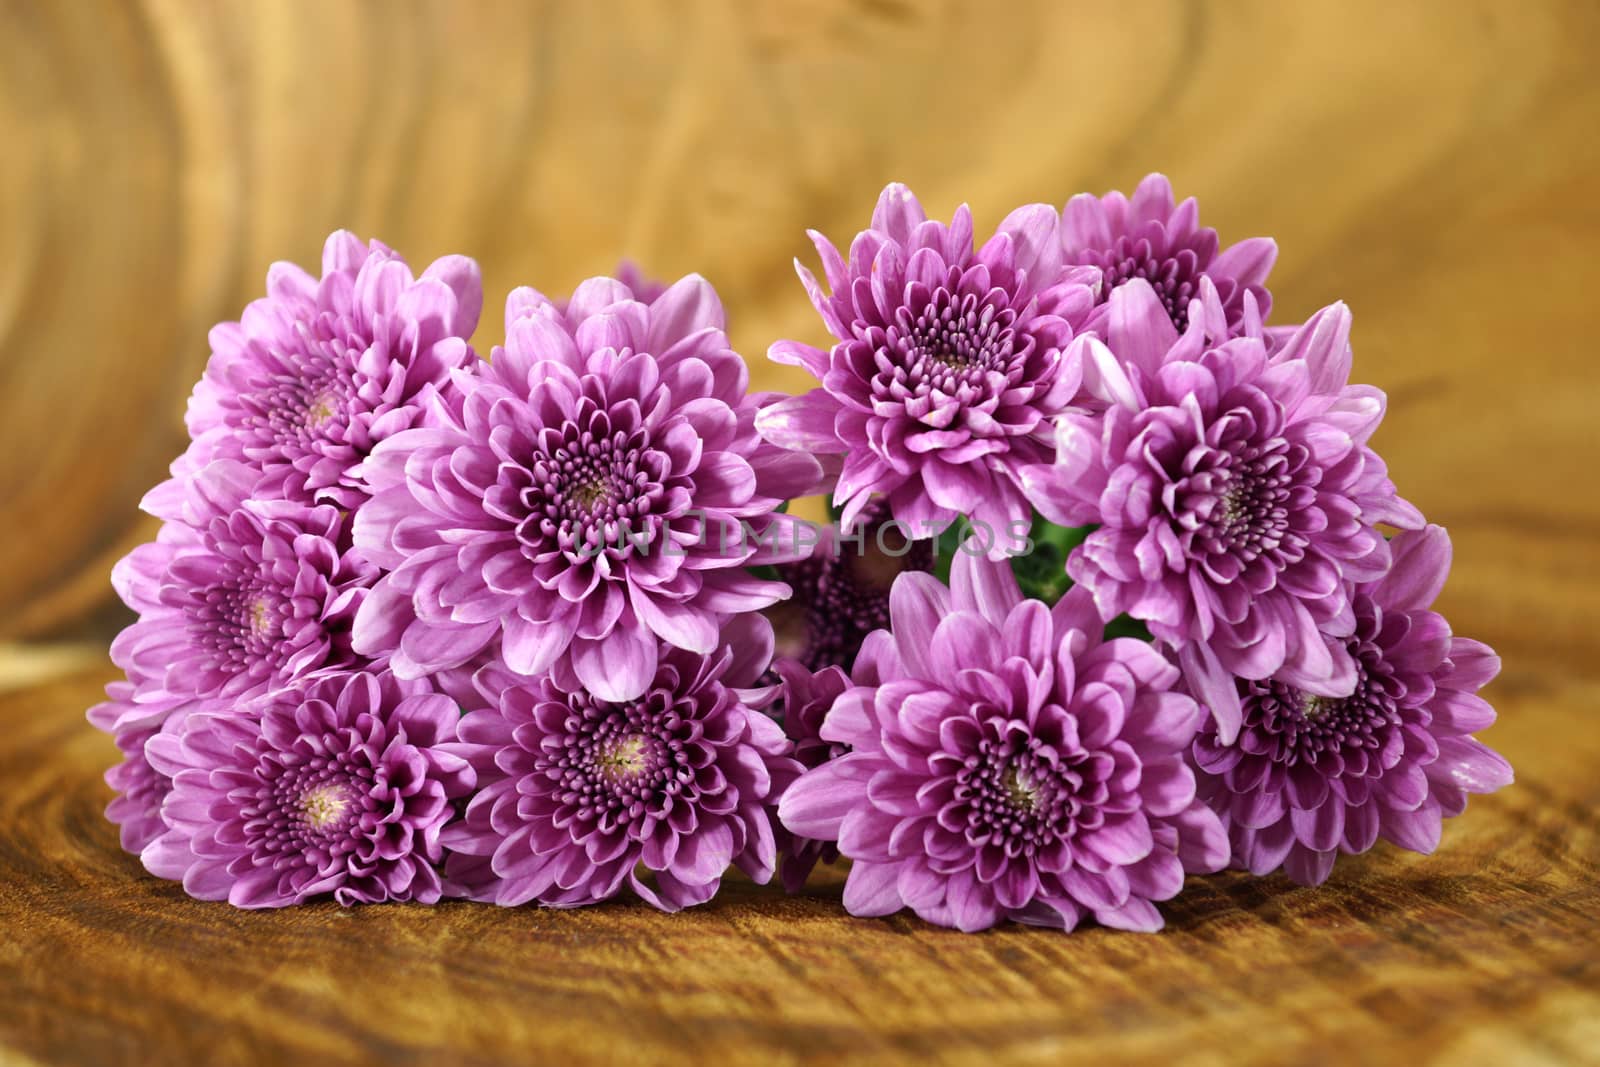 Violet chrysanthemum on wood background